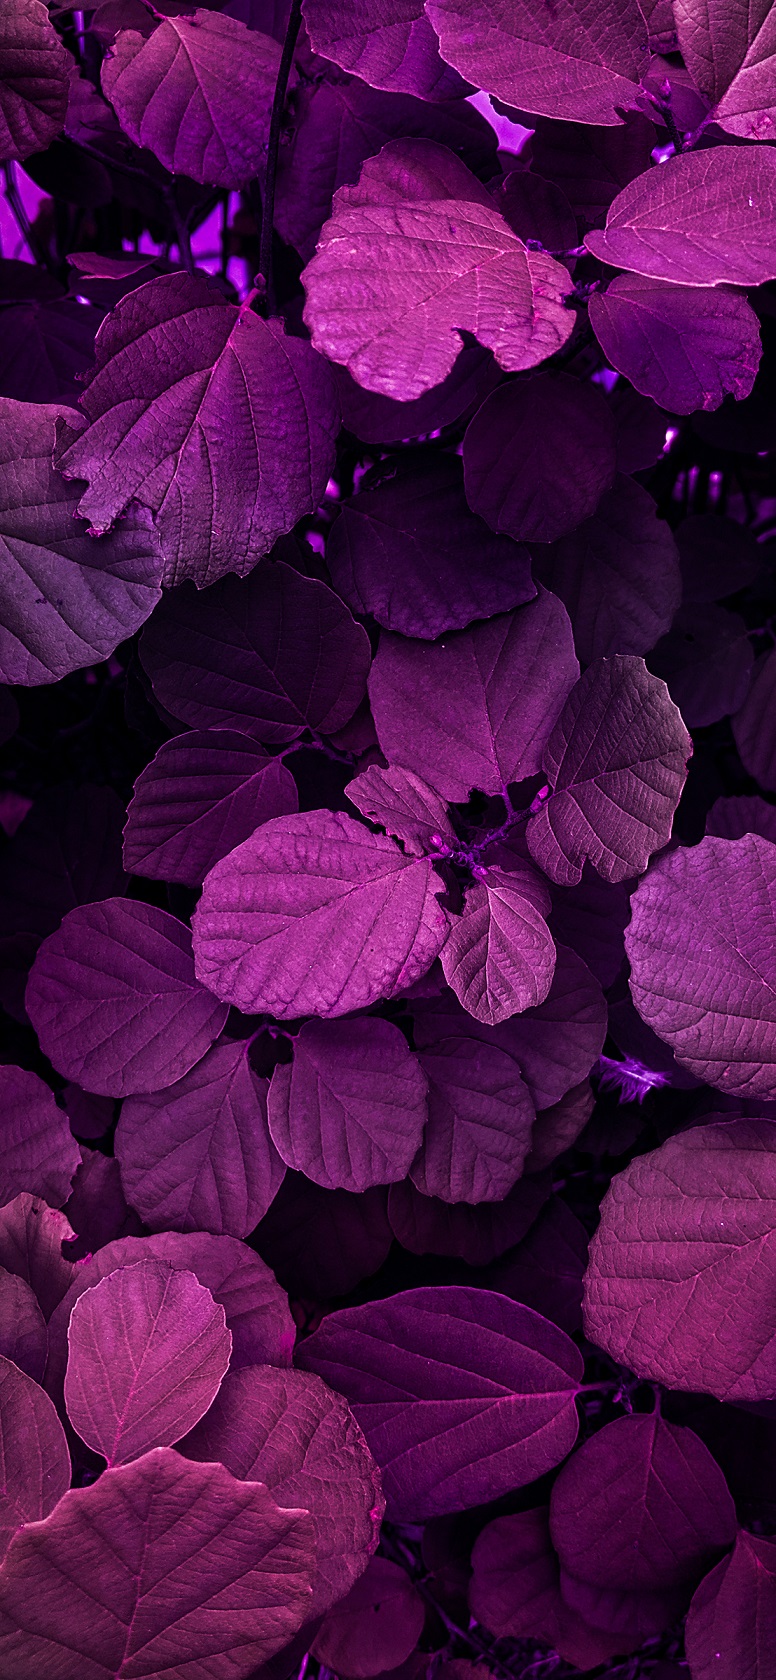 Nature-photography-iPhone-wallpaper-wallsbyjfl-magenta-leaves